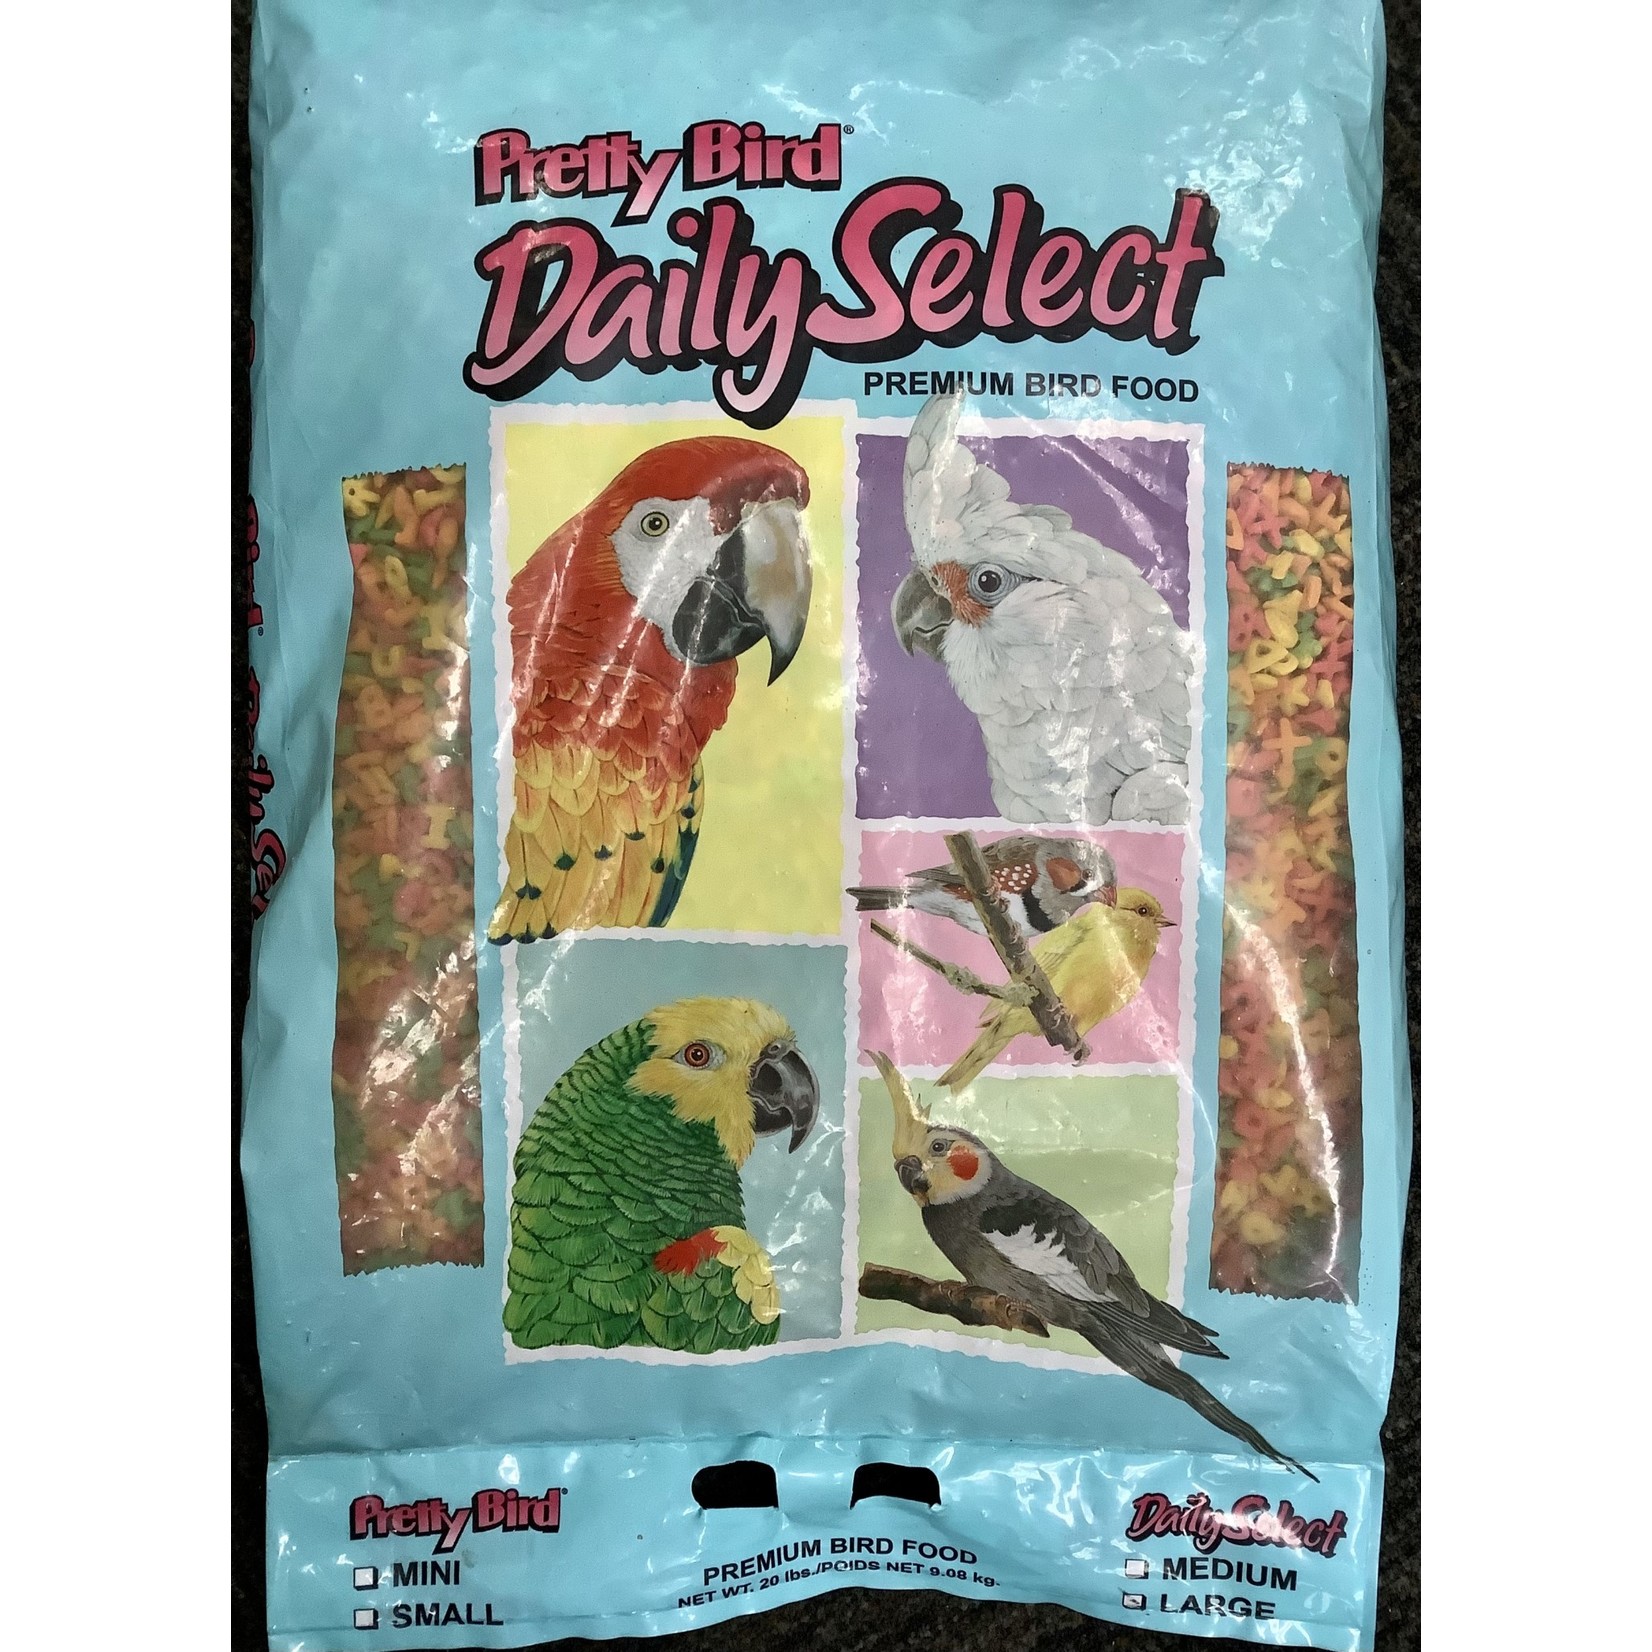 Pretty Bird PRETTY BIRD. Daily Select, premium bird food. Medium. 20lb